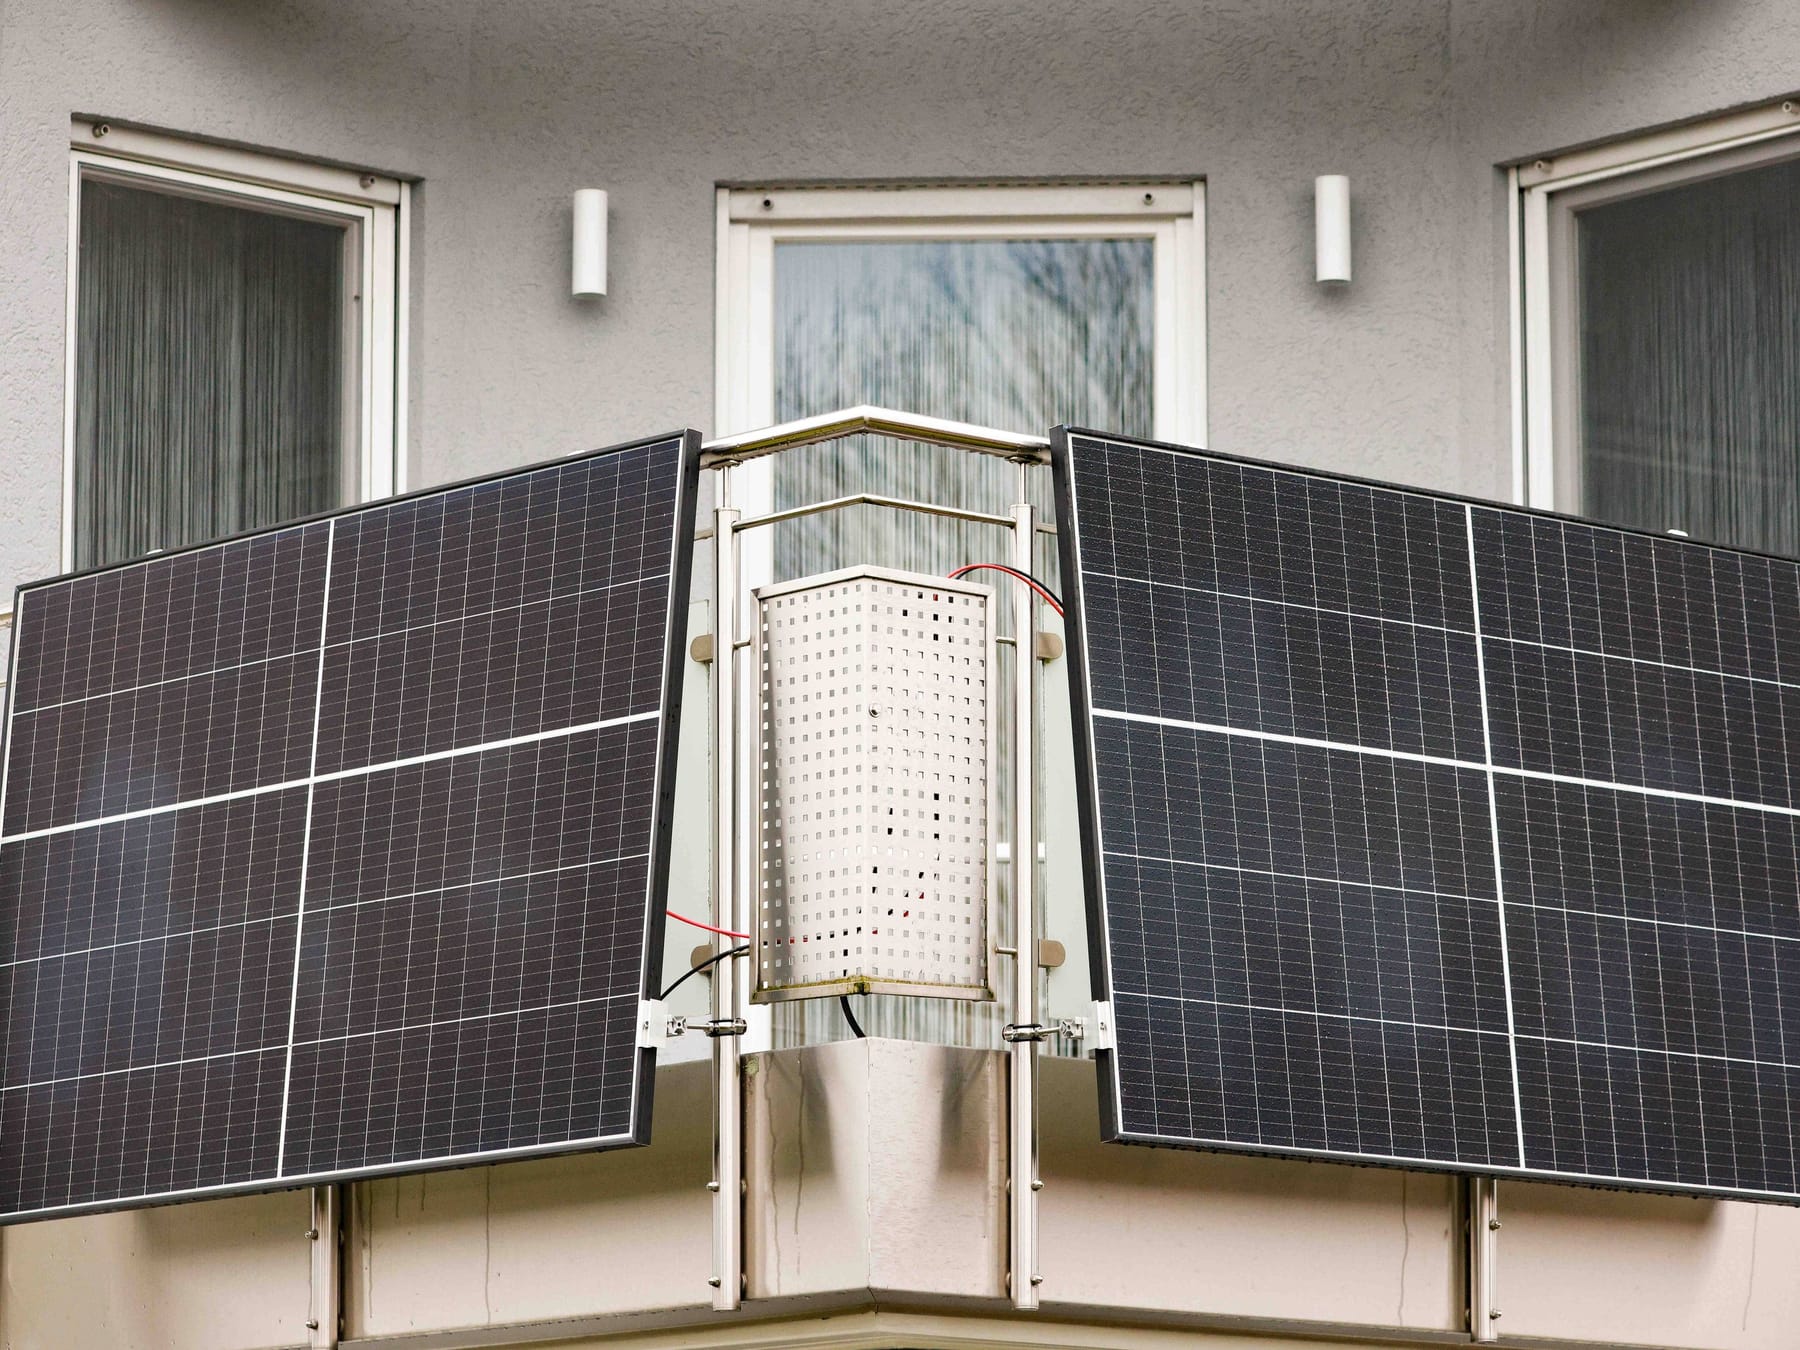 https://images.t-online.de/2023/01/vmNEhVKvYtG6/500x209:3000x2250/fit-in/1800x0/marburg-deutschland-14-januar-2023-balkonkraftwerk-balkonkraftwerke-sind-kleine-solaranlagen-fuer-den-balkon-marburg-hessen-marburg-germany-14-january-2023-balcony-power-plant-balcony-power-plants-are-small-solar-power-plants-for-balcony-marburg-hesse-copyright-xfotostandx-xlammerschmidtx.jpg